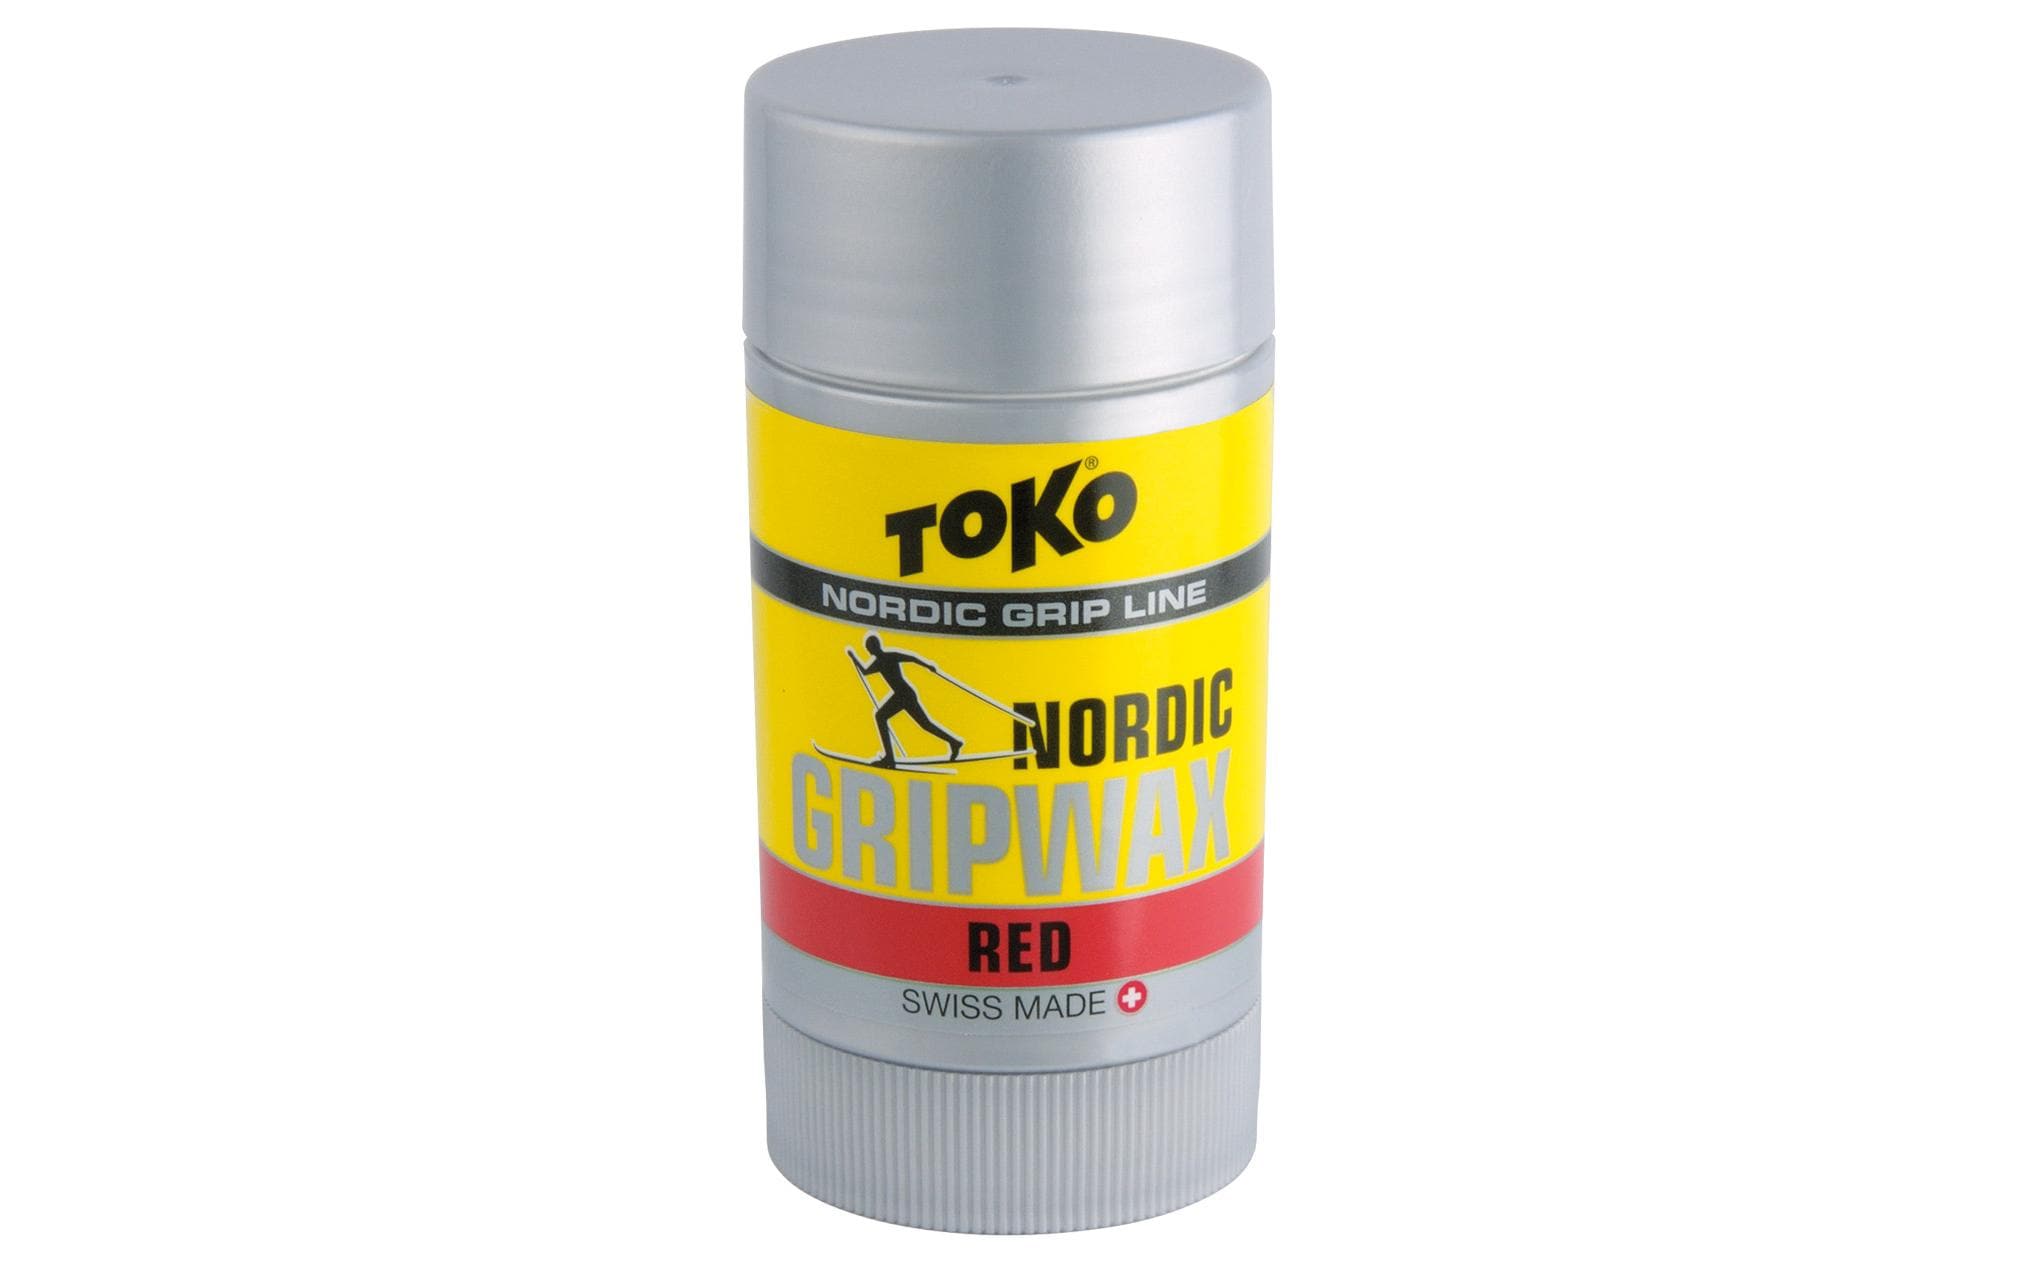 TOKO Nordic Grip Wax Red 25 g